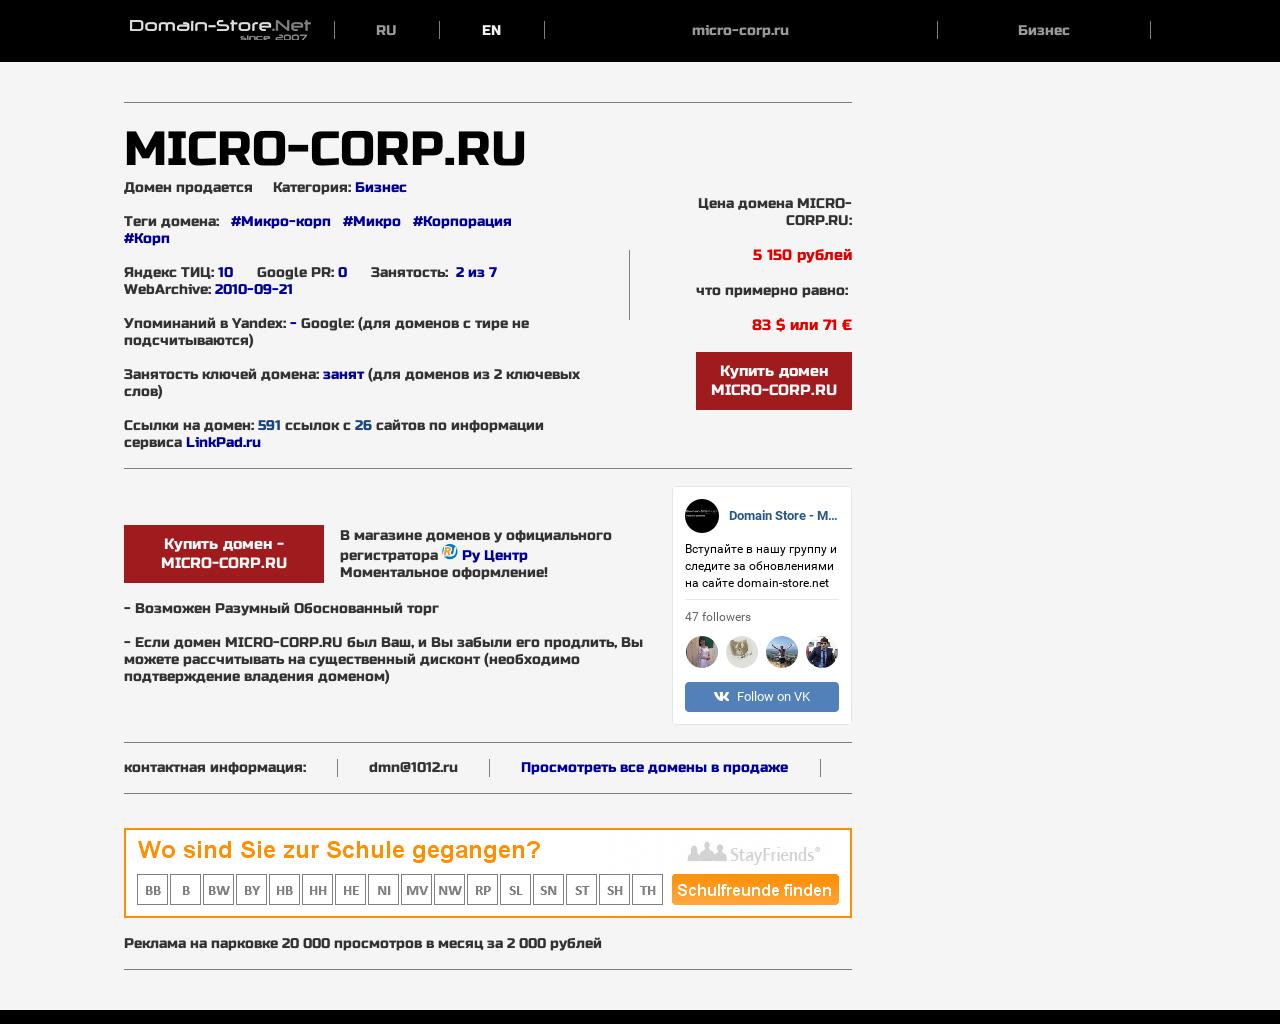 Изображение сайта micro-corp.ru в разрешении 1280x1024